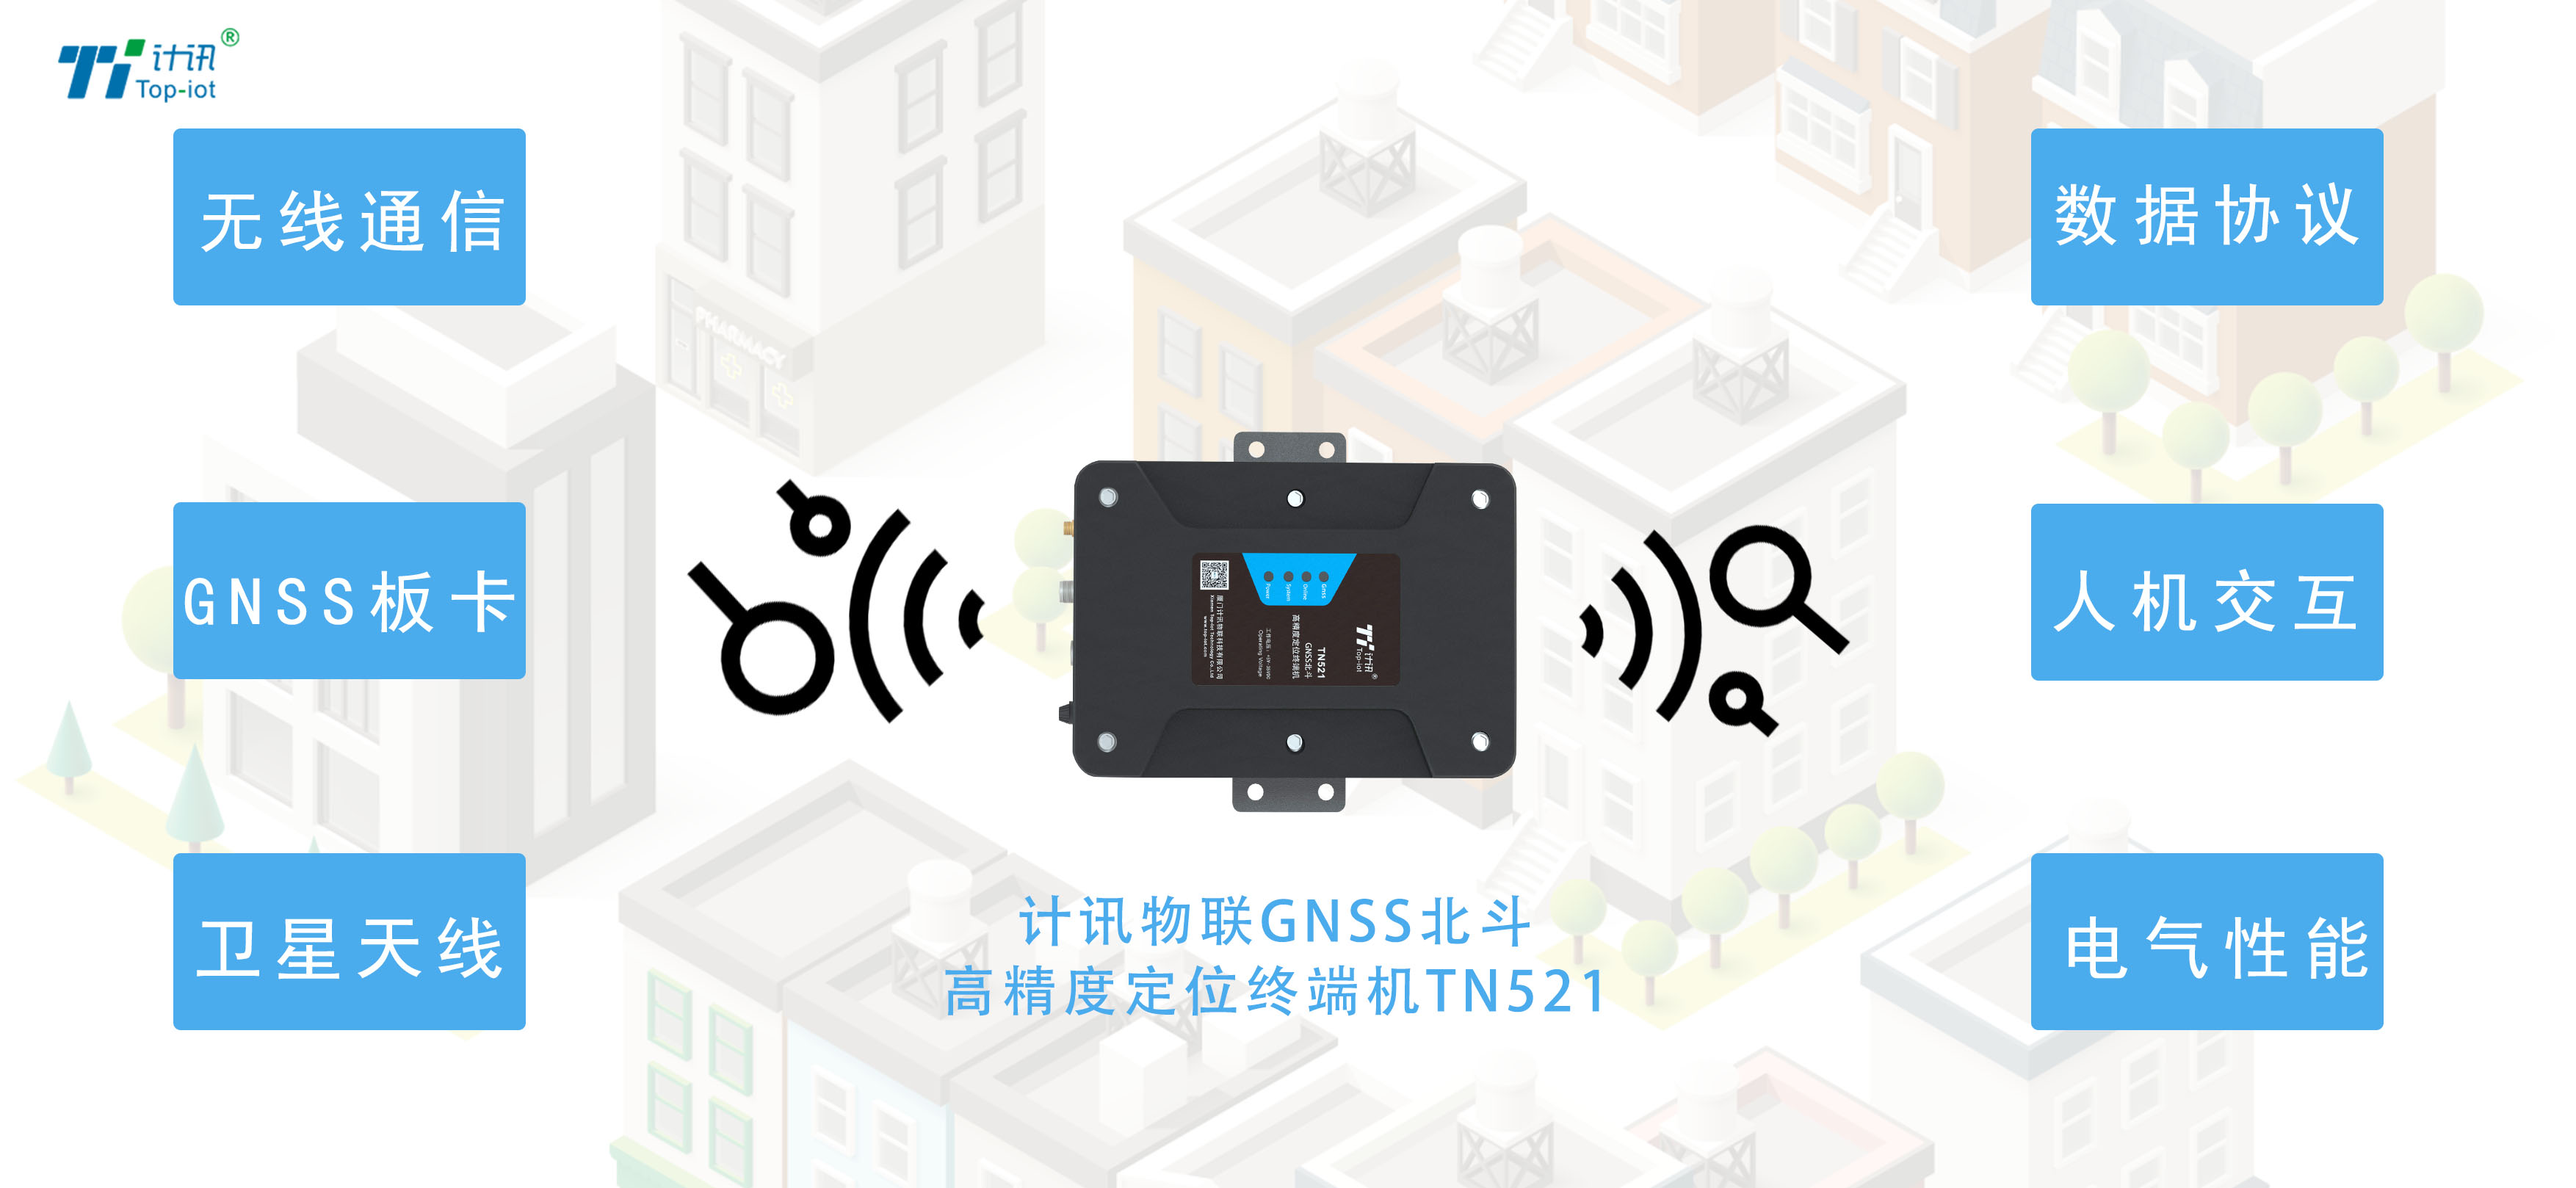 GNSS北斗高精度定位 建筑物安全监测方案